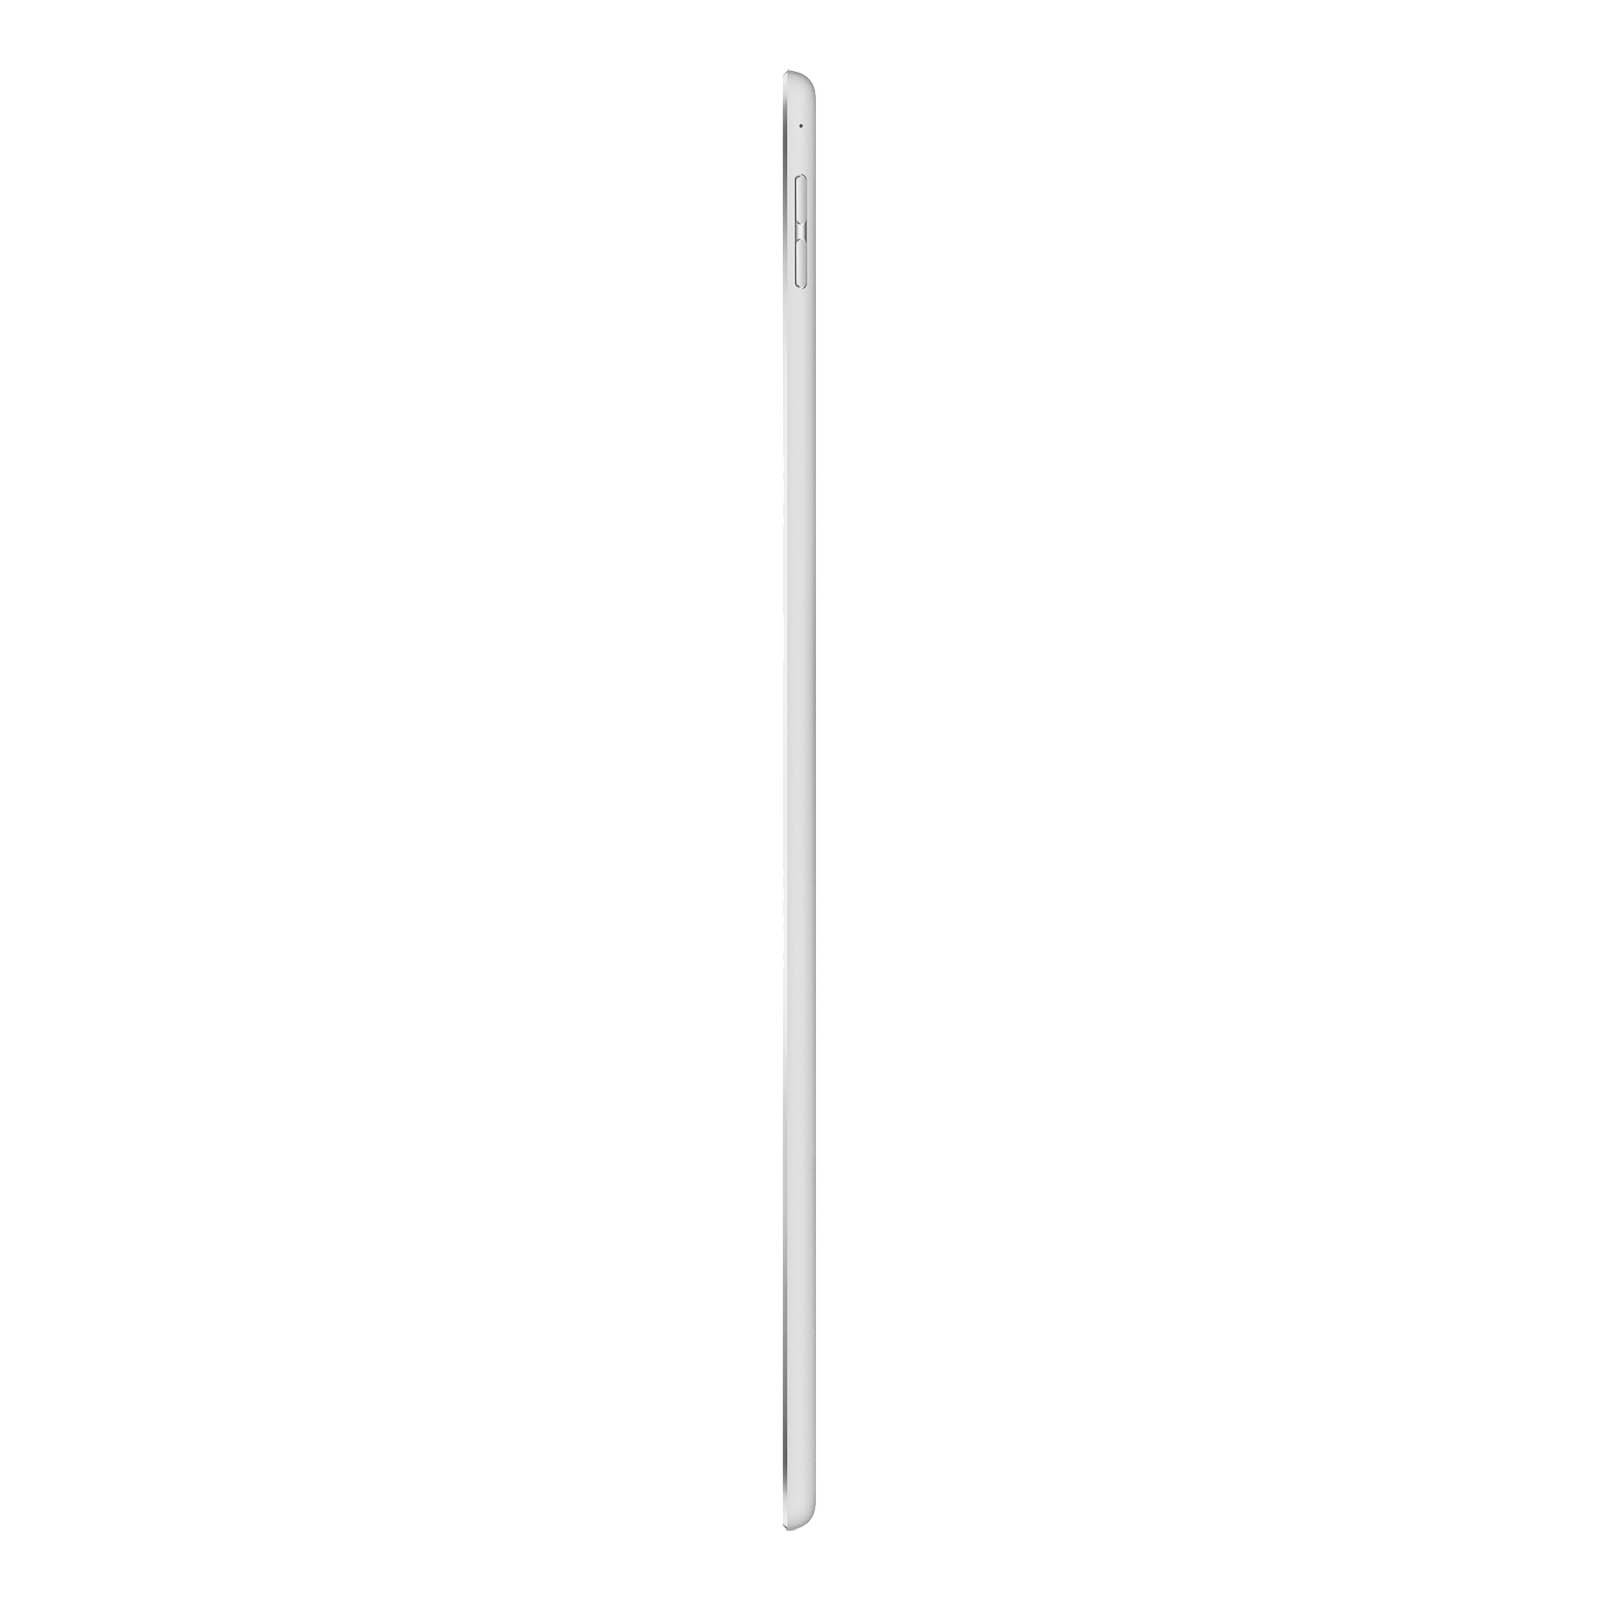 iPad Pro 12.9 Inch 1st Gen 128GB Silver Good - WiFi